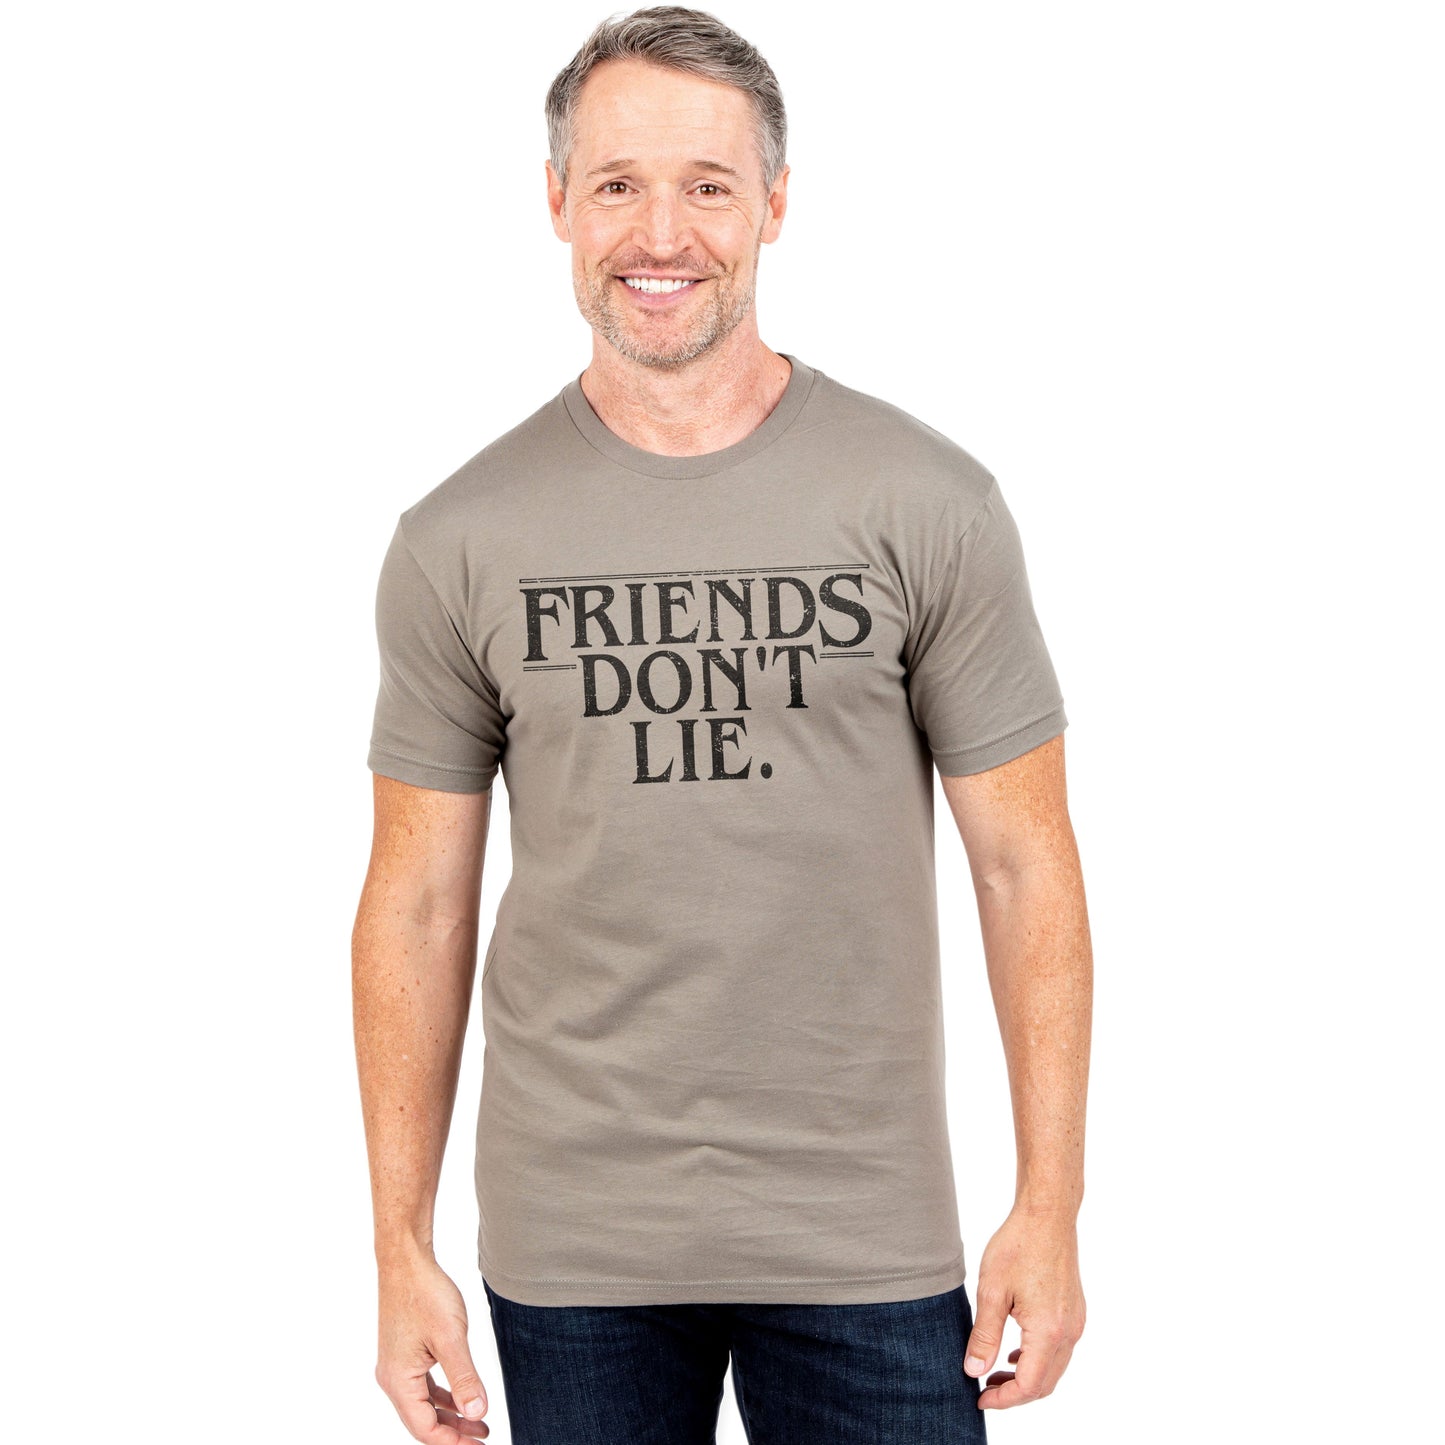 Friends Dont Lie Printed Graphic Men's Crew T-Shirt Heather Tan Model Image